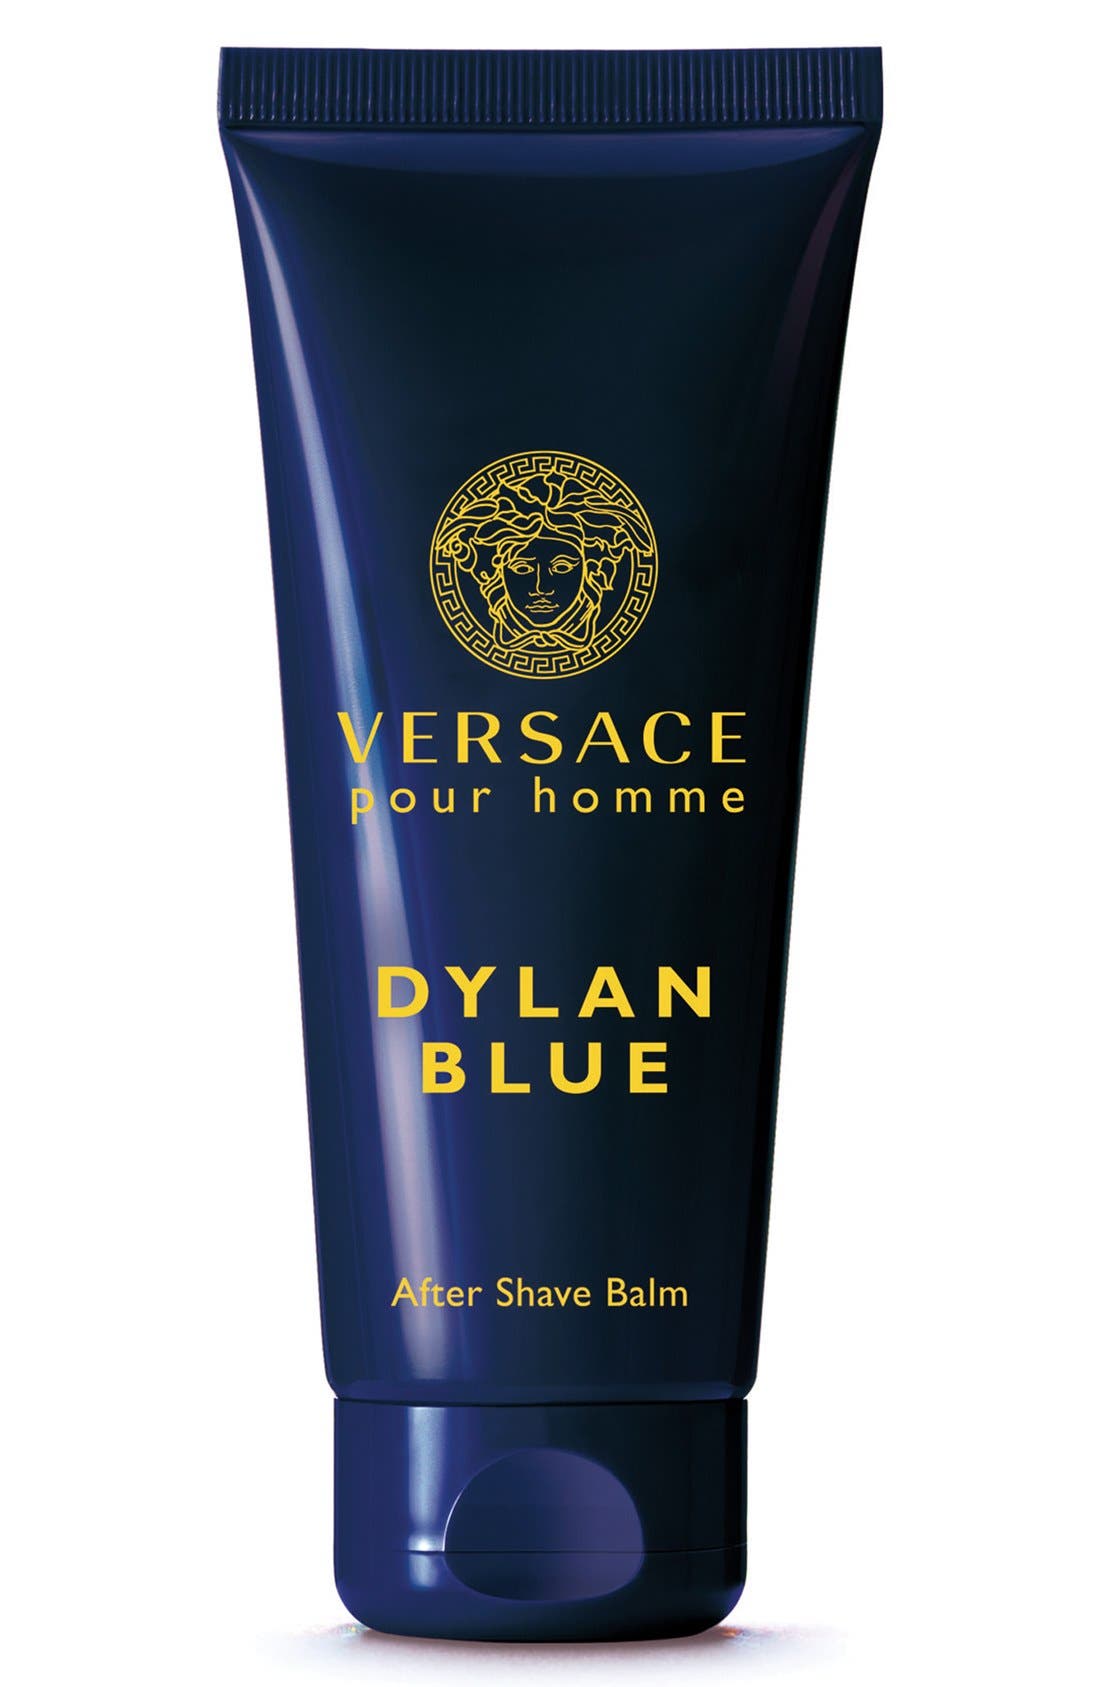 Versace Dylan Blue After Shave Balm at Nordstrom